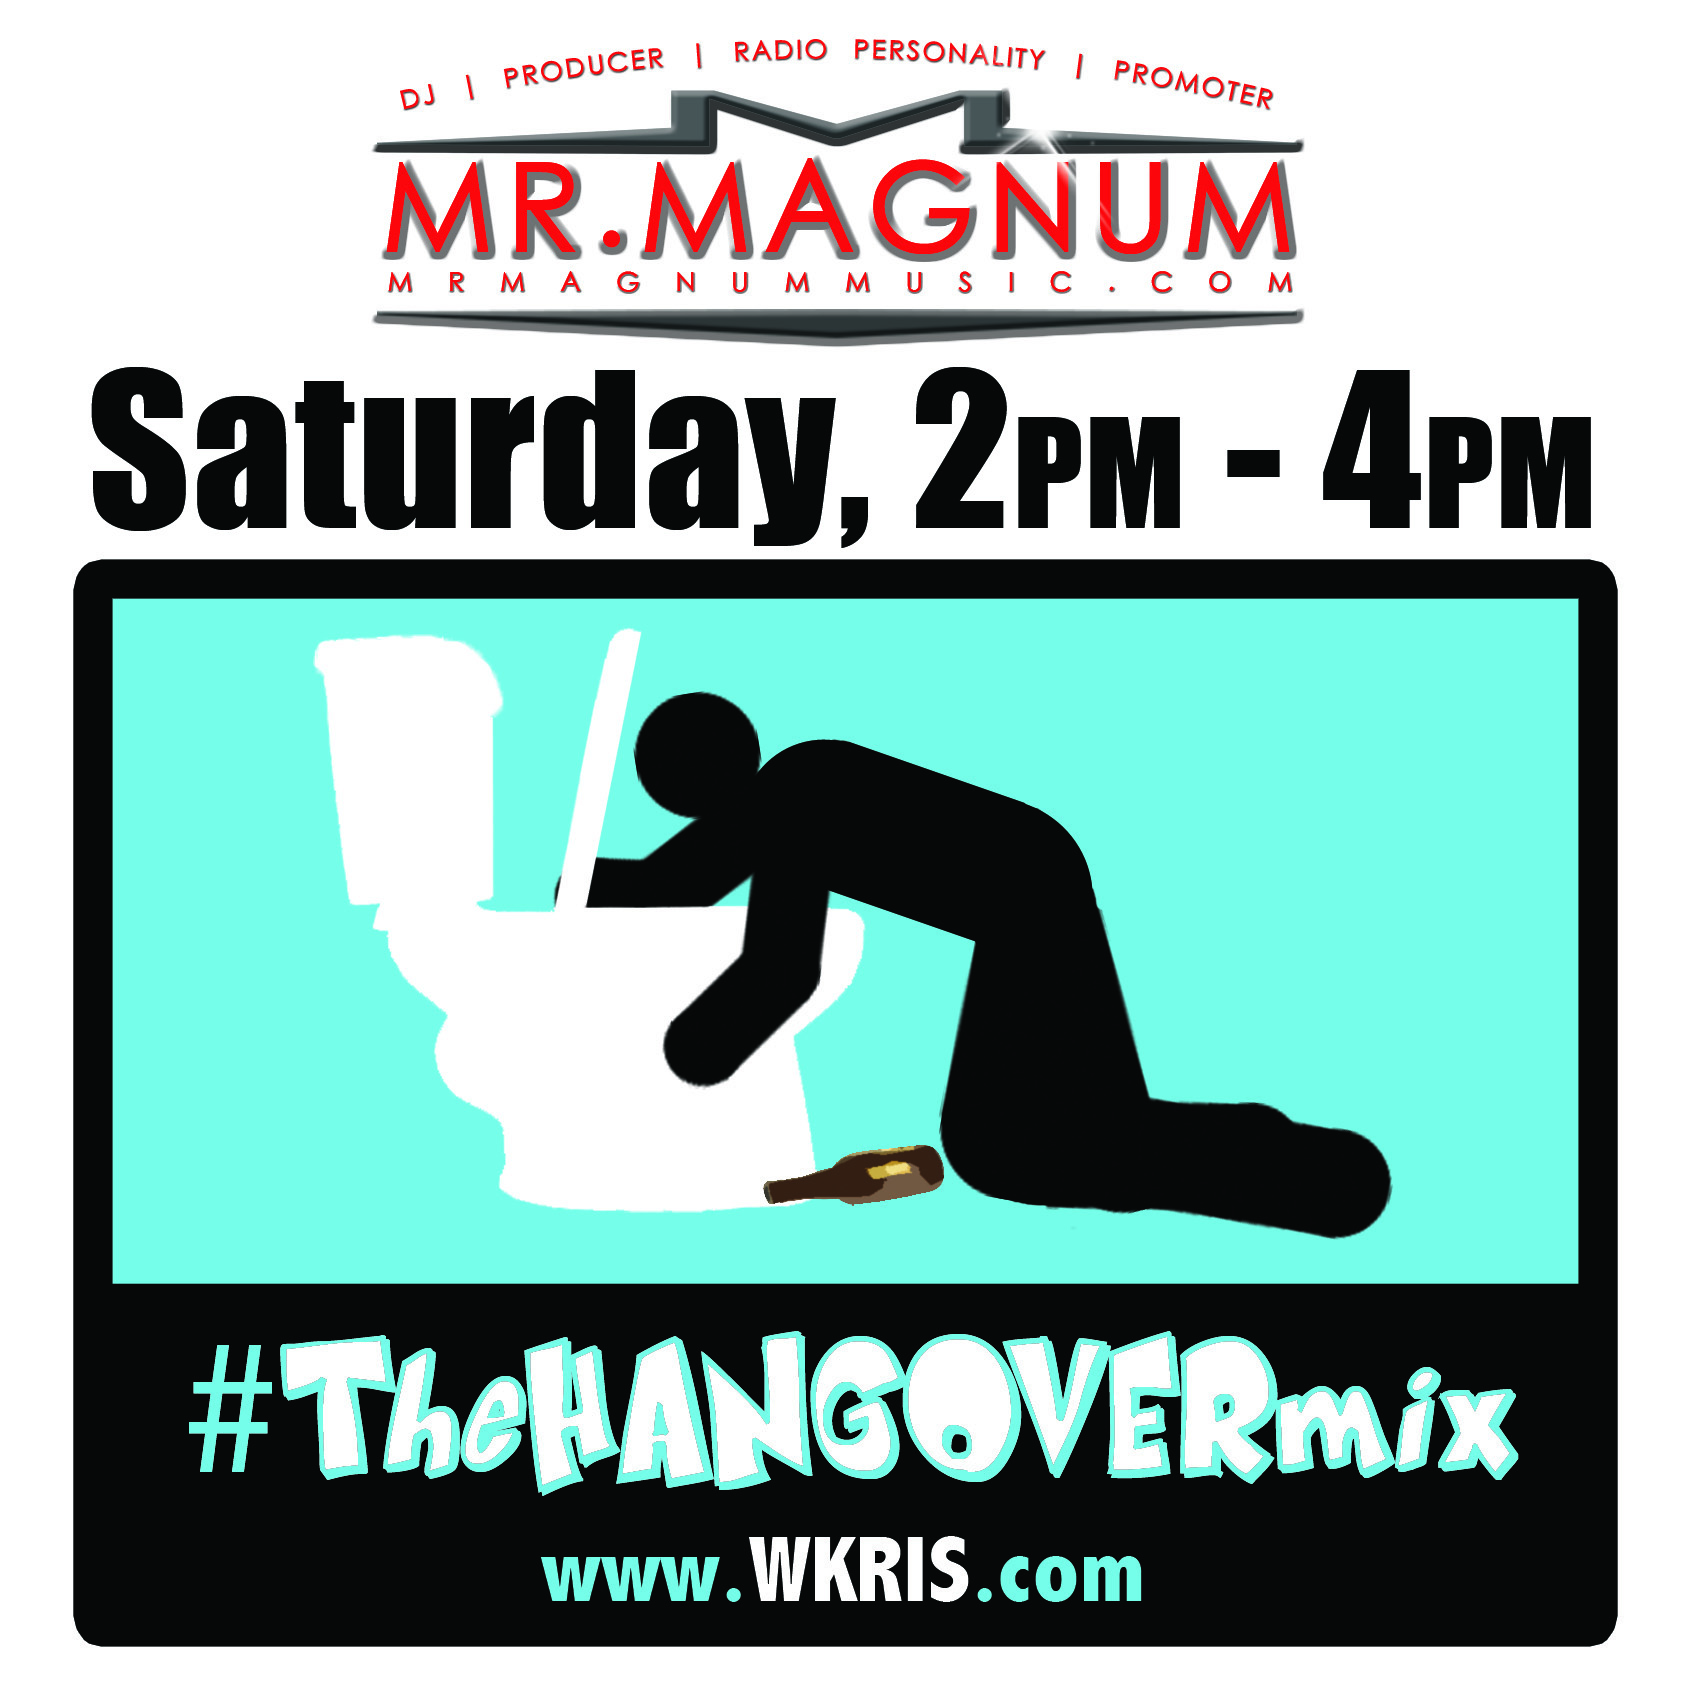 The Hangover Mix 11/05/16 on @KofeeRadio